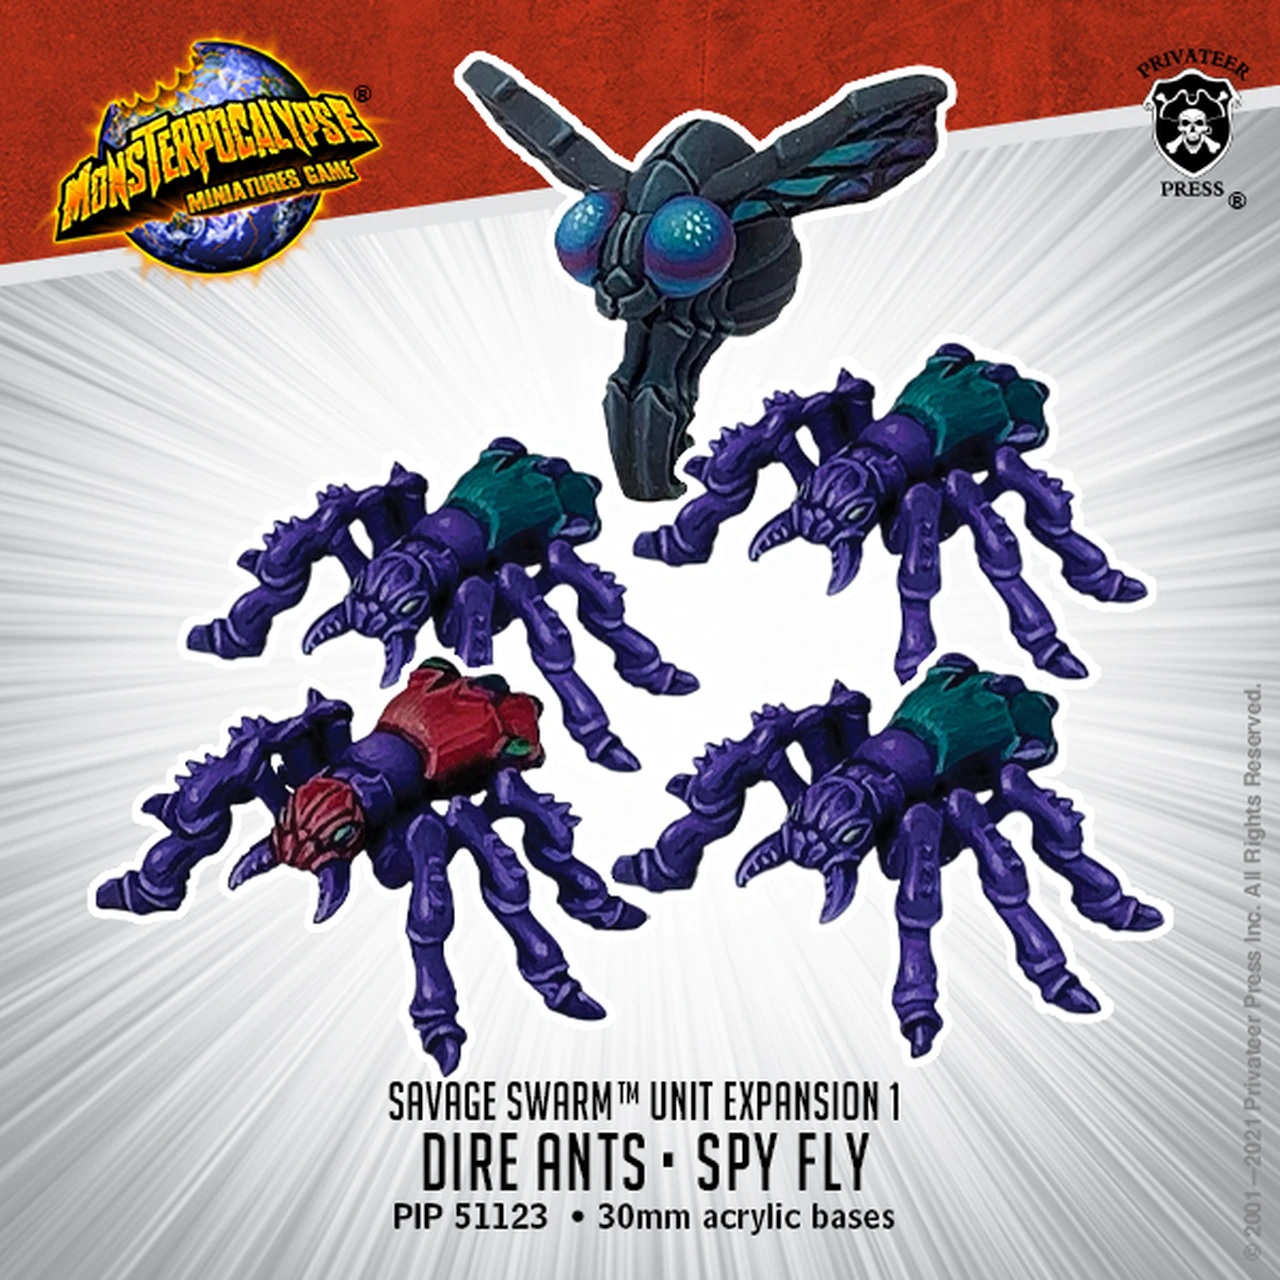 Dire Ants & Spy Fly - Monsterpocalypse